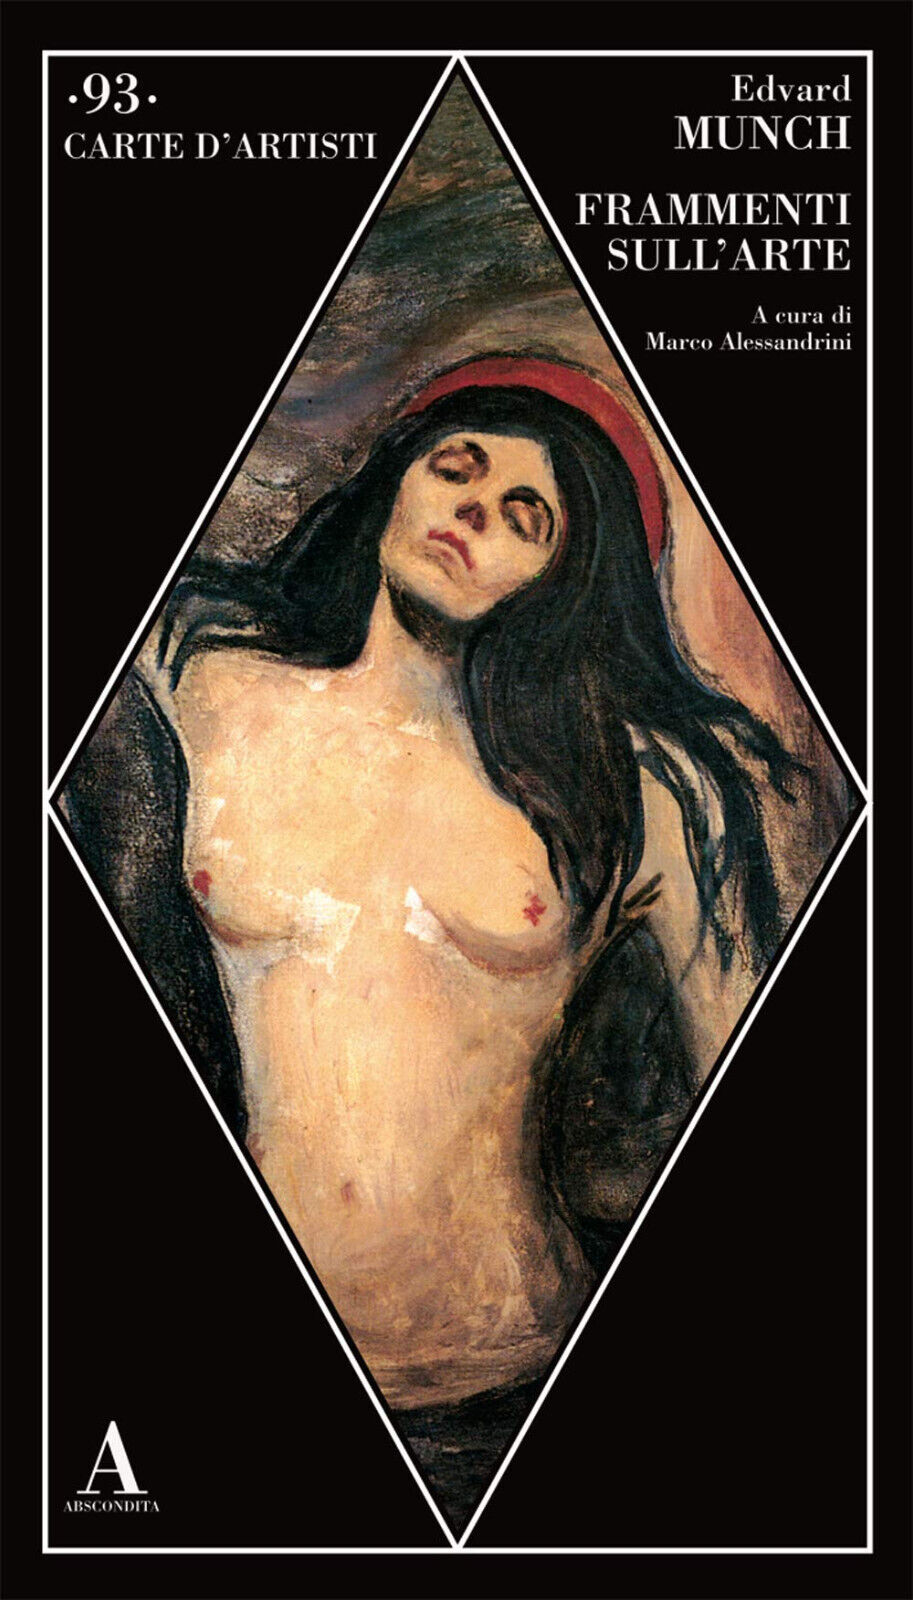 Frammenti sull'arte - Edvard Munch - Abscondita, 2019